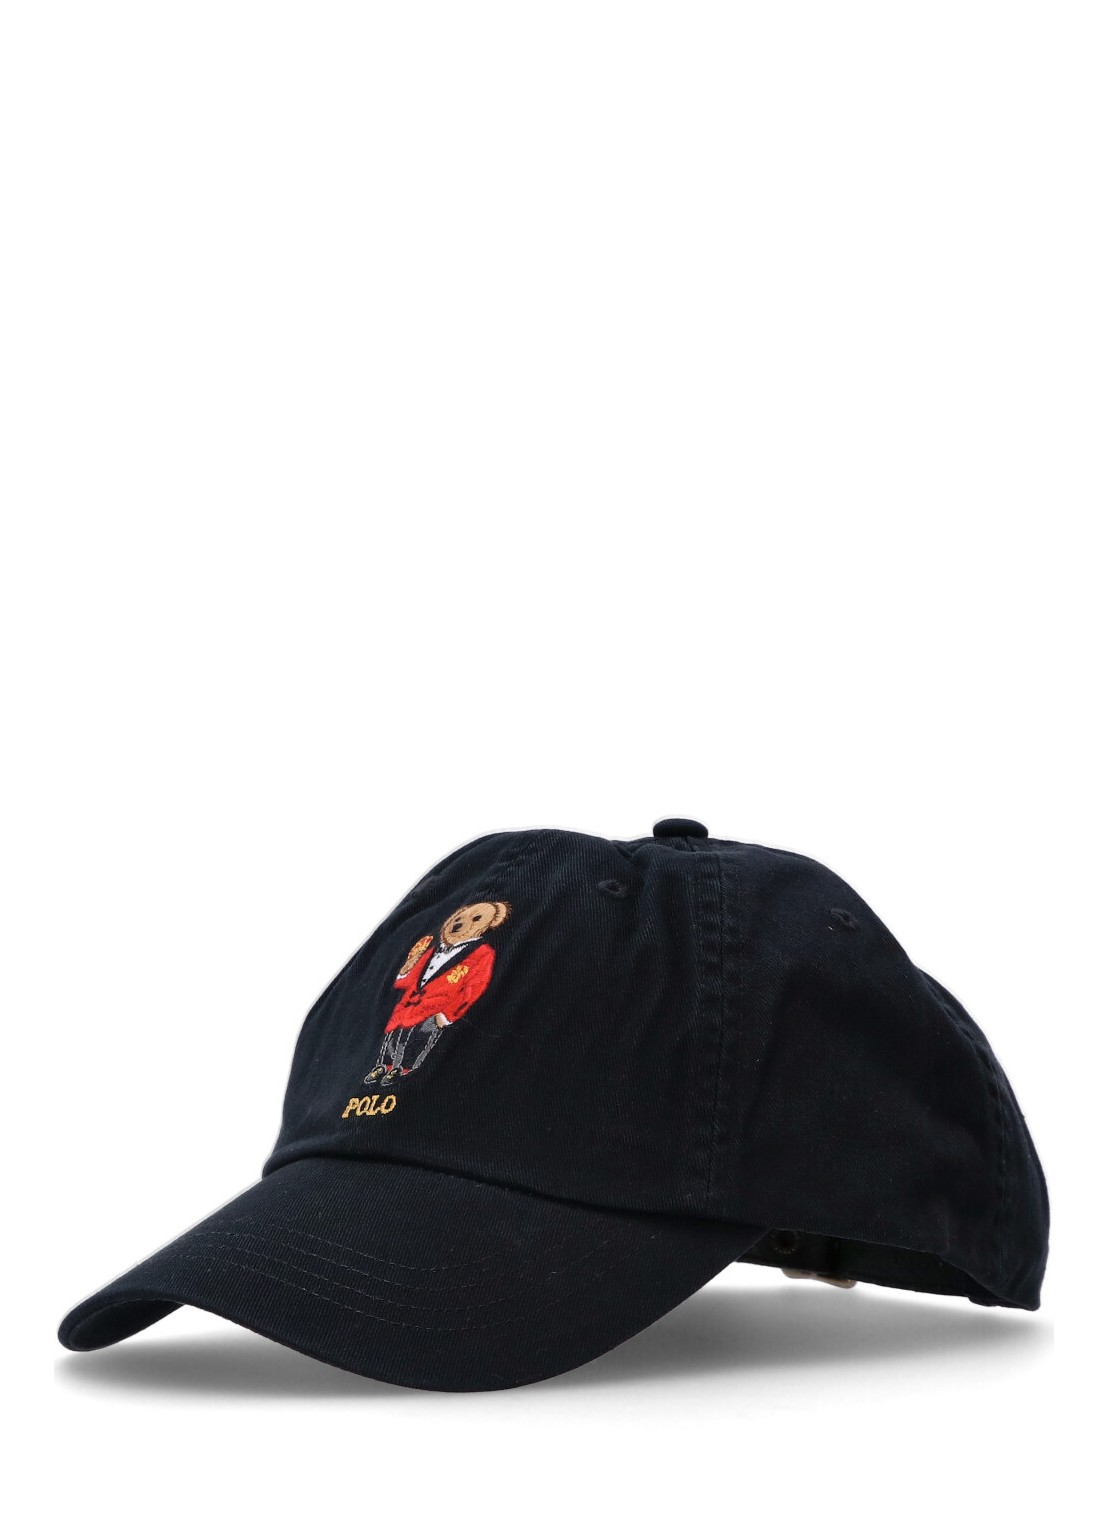 Gorras polo ralph lauren cap man lnybearcap-cap-hat 710926923001 polo black talla T/U
 